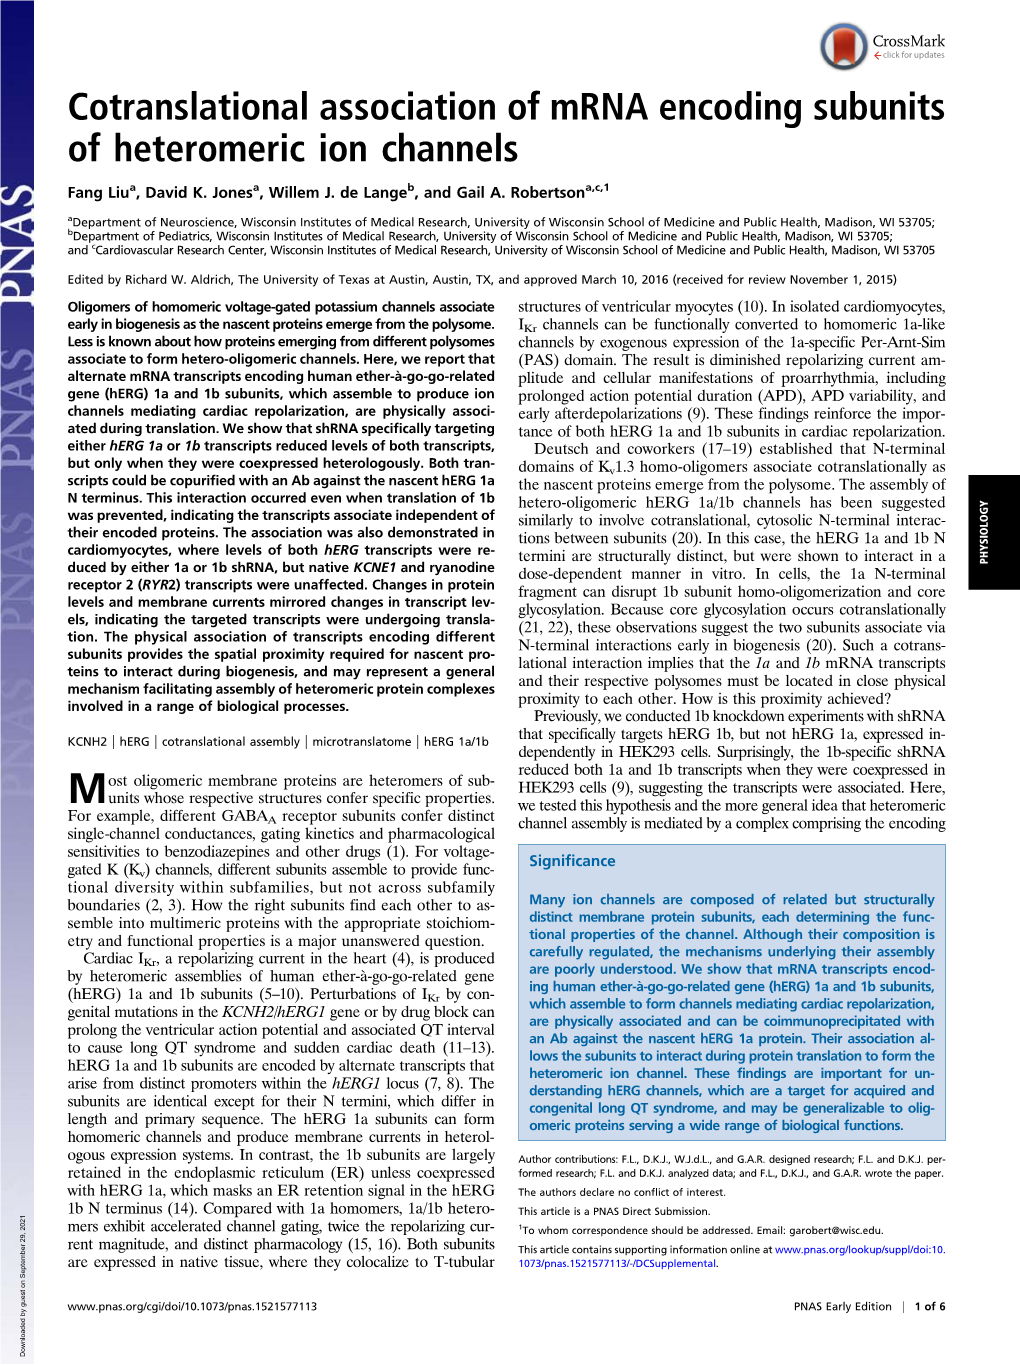 Cotranslational Association of Mrna Encoding Subunits of Heteromeric Ion Channels